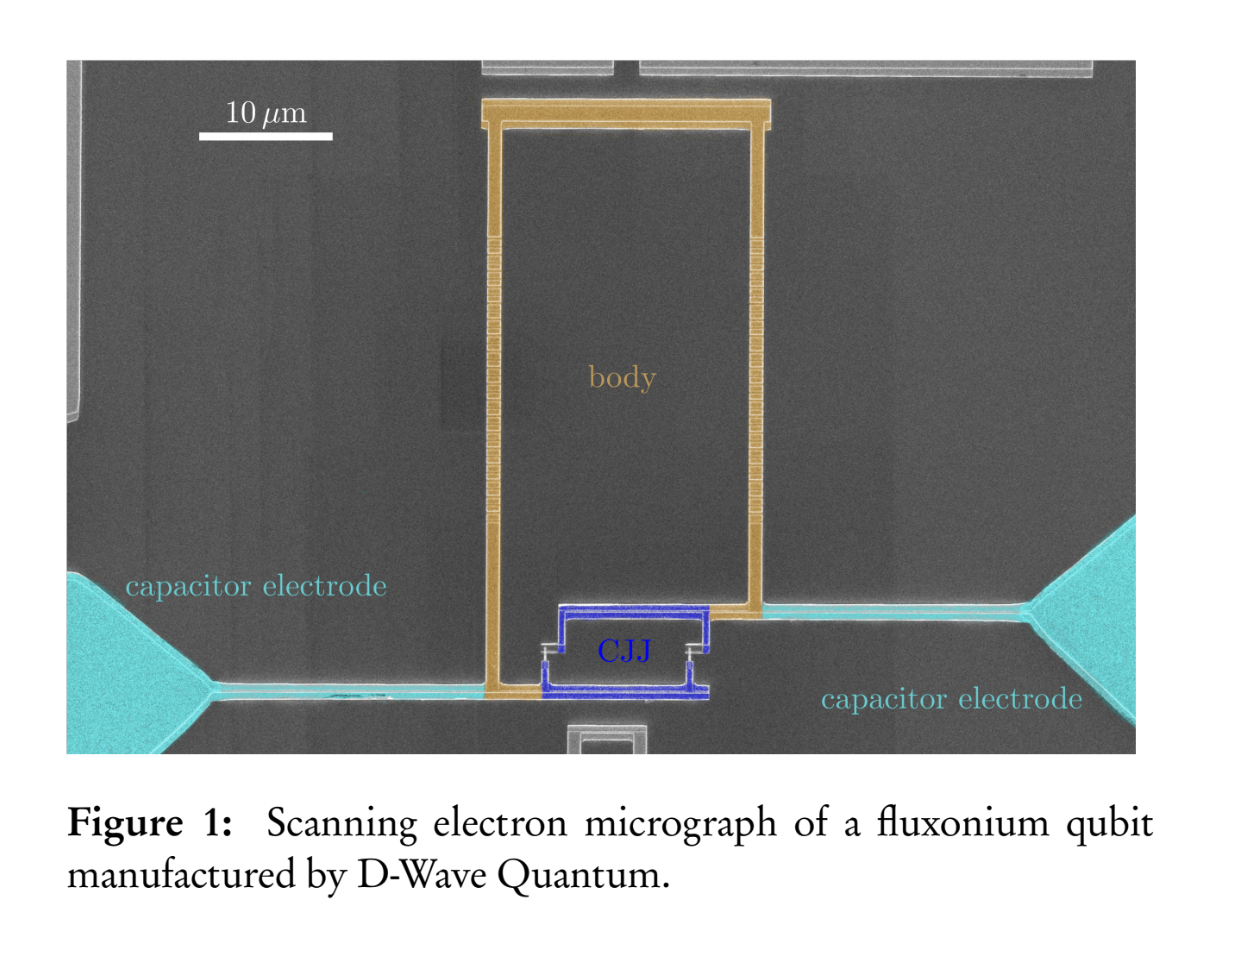 D-Wave Achieves Breakthrough In Quantum Computing With State-Of-The-Art Fluxonium Qubits